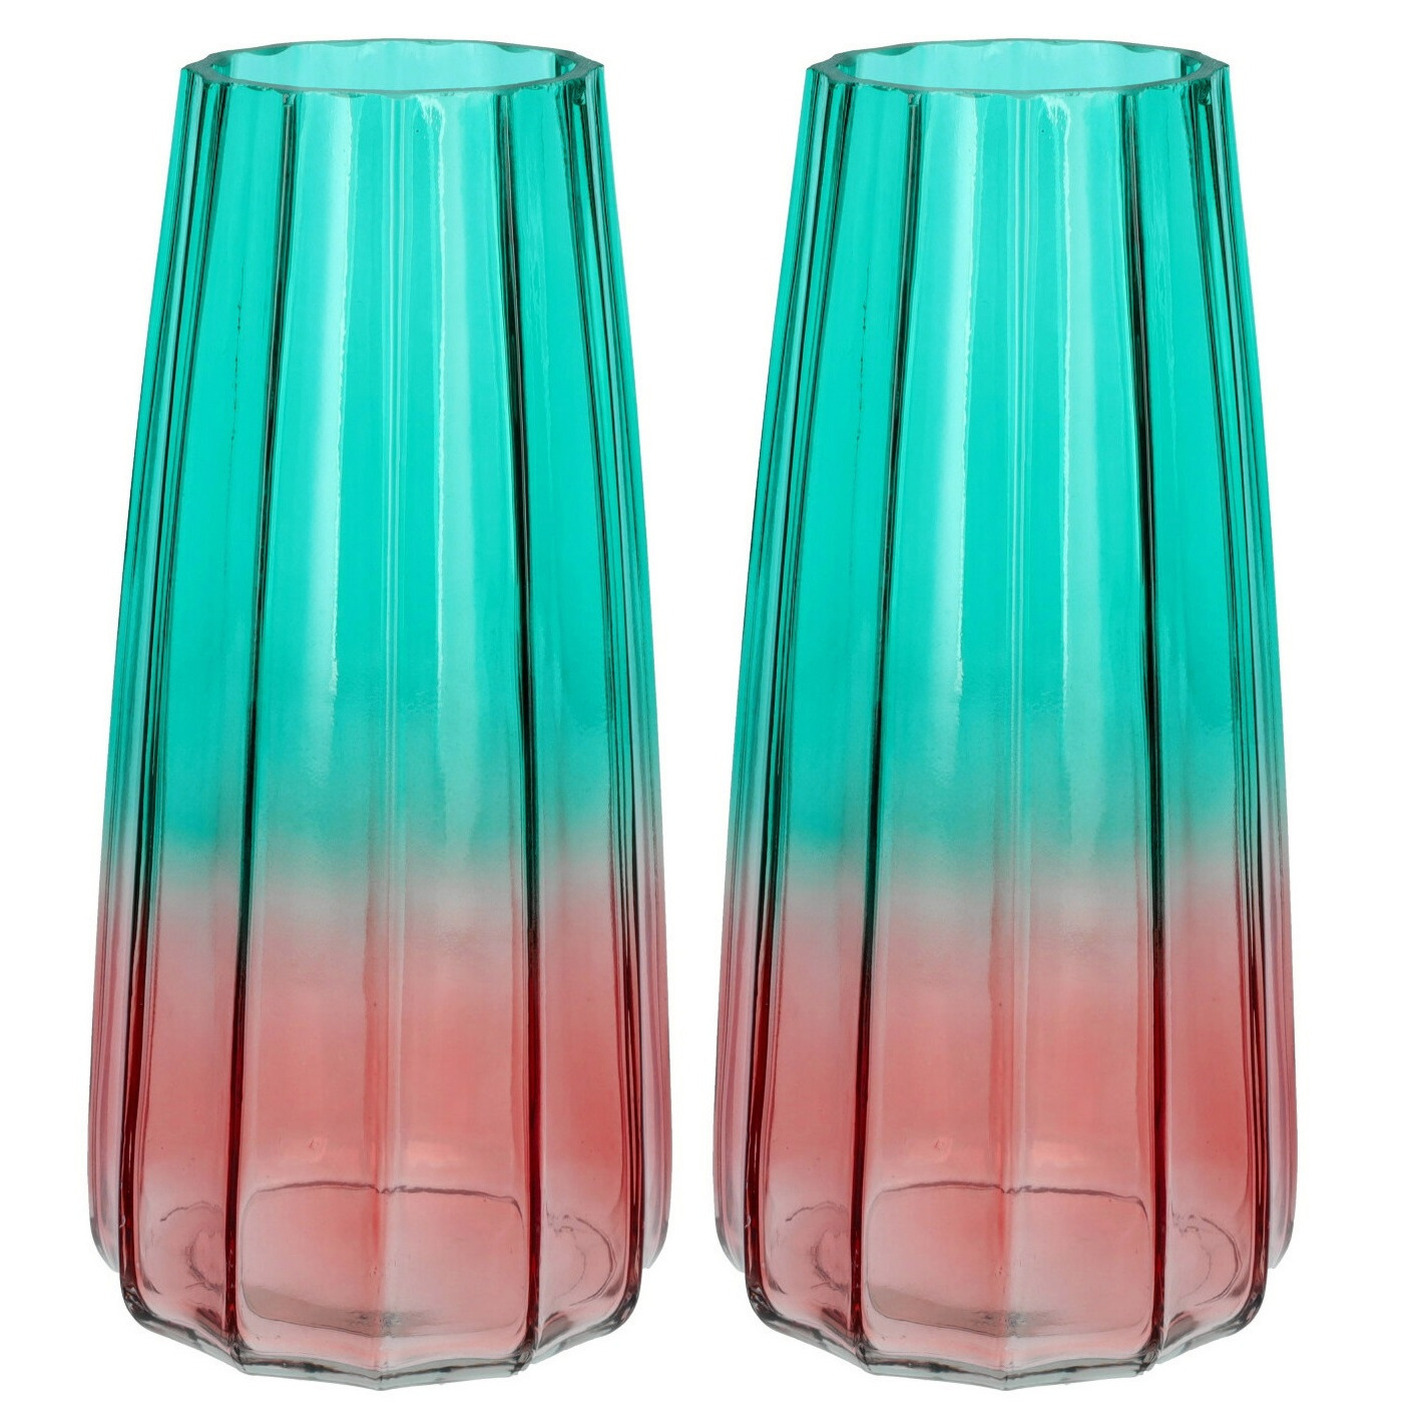 Bellatio Design Bloemenvaas - set van 2x - blauw/roze - transparant glas - D10 x H21 cm -